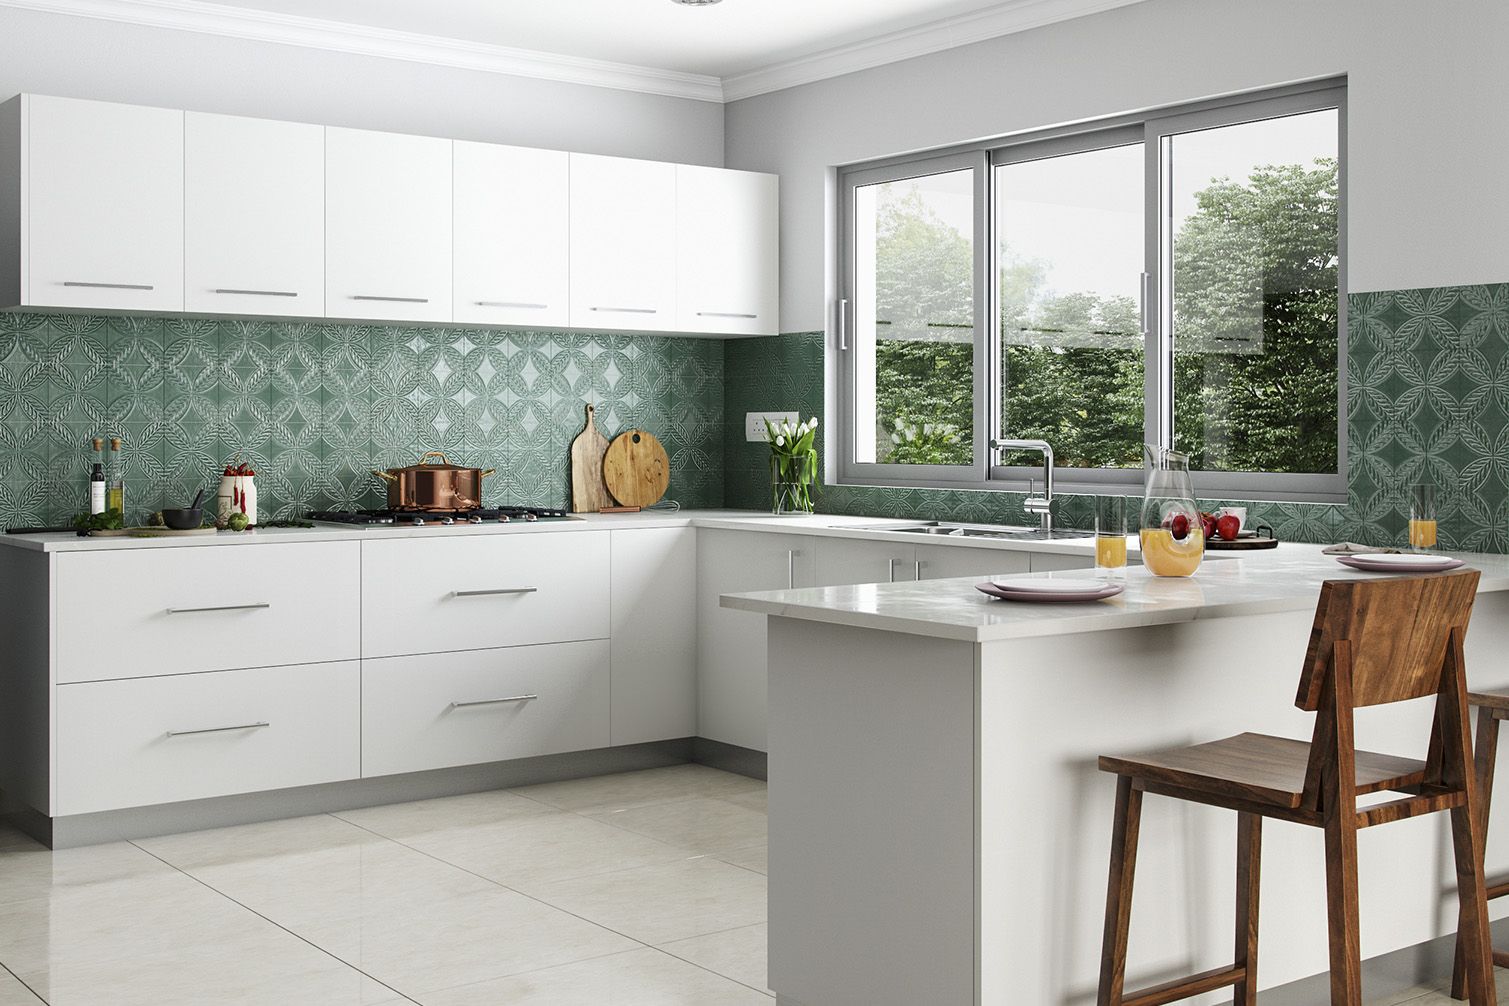 Modern Green Ceramic Kitchen Tile Design With Geometric Pattern